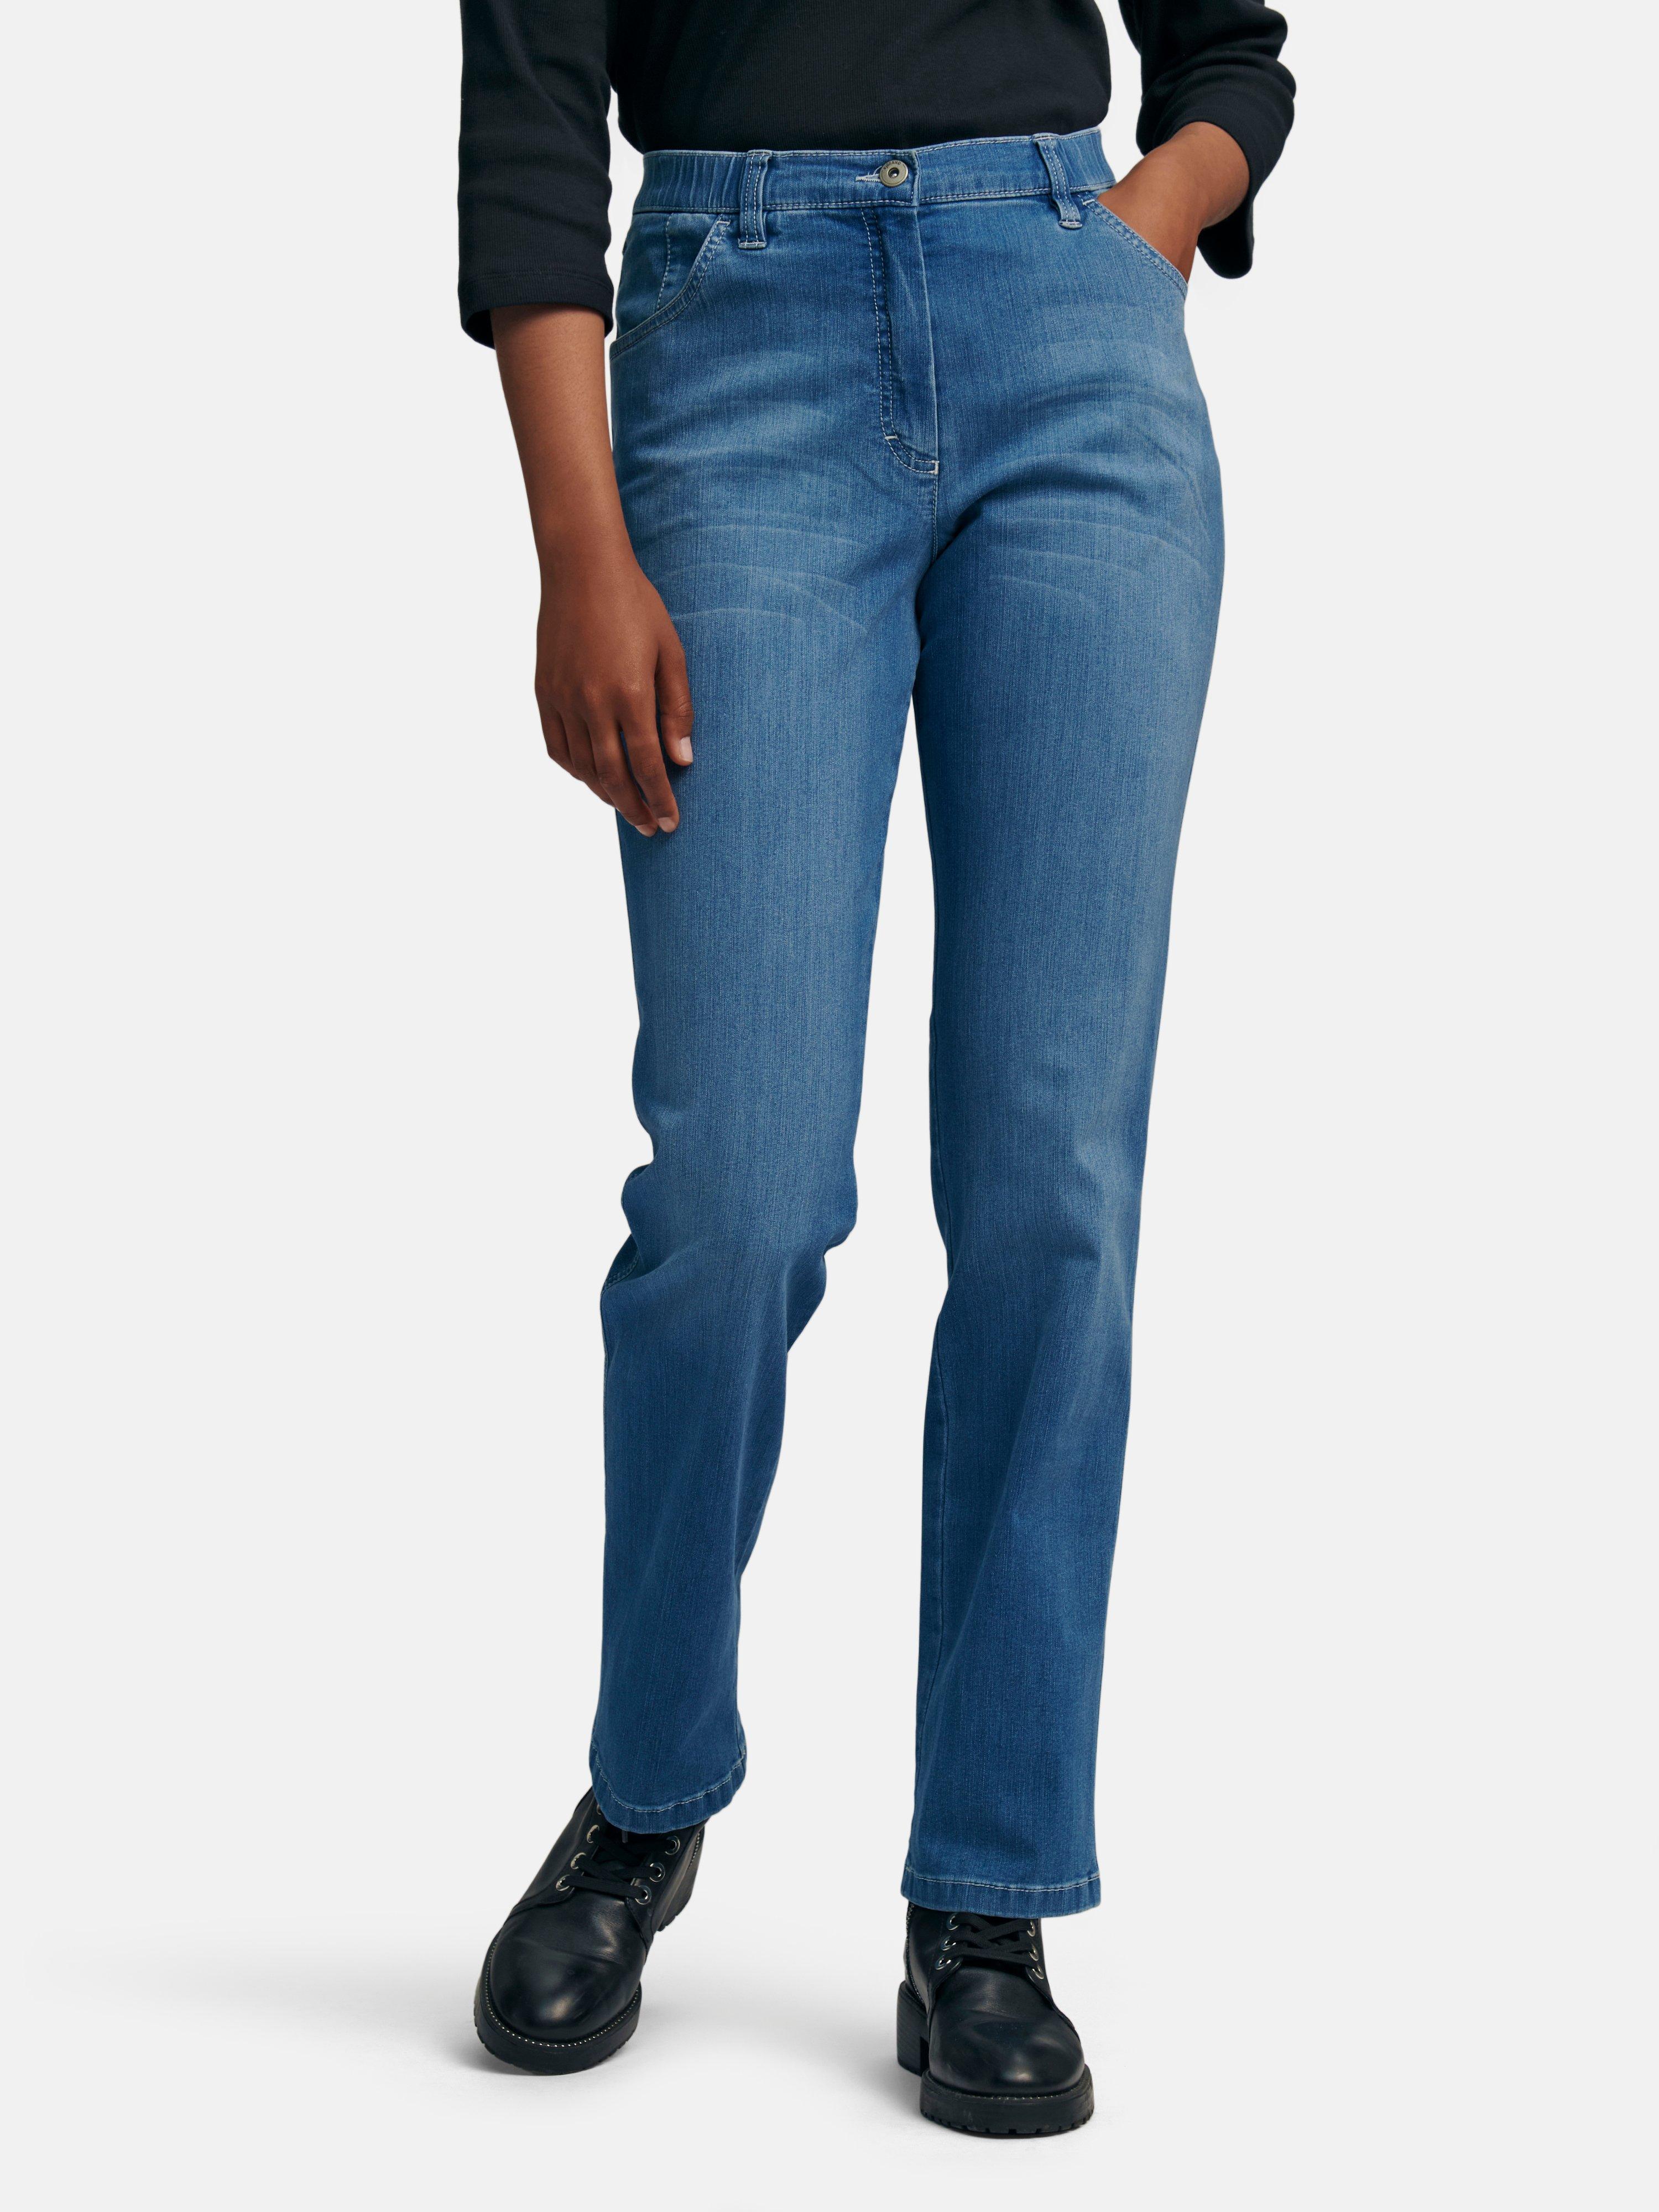 KjBrand - Jeans Modell BettyCS